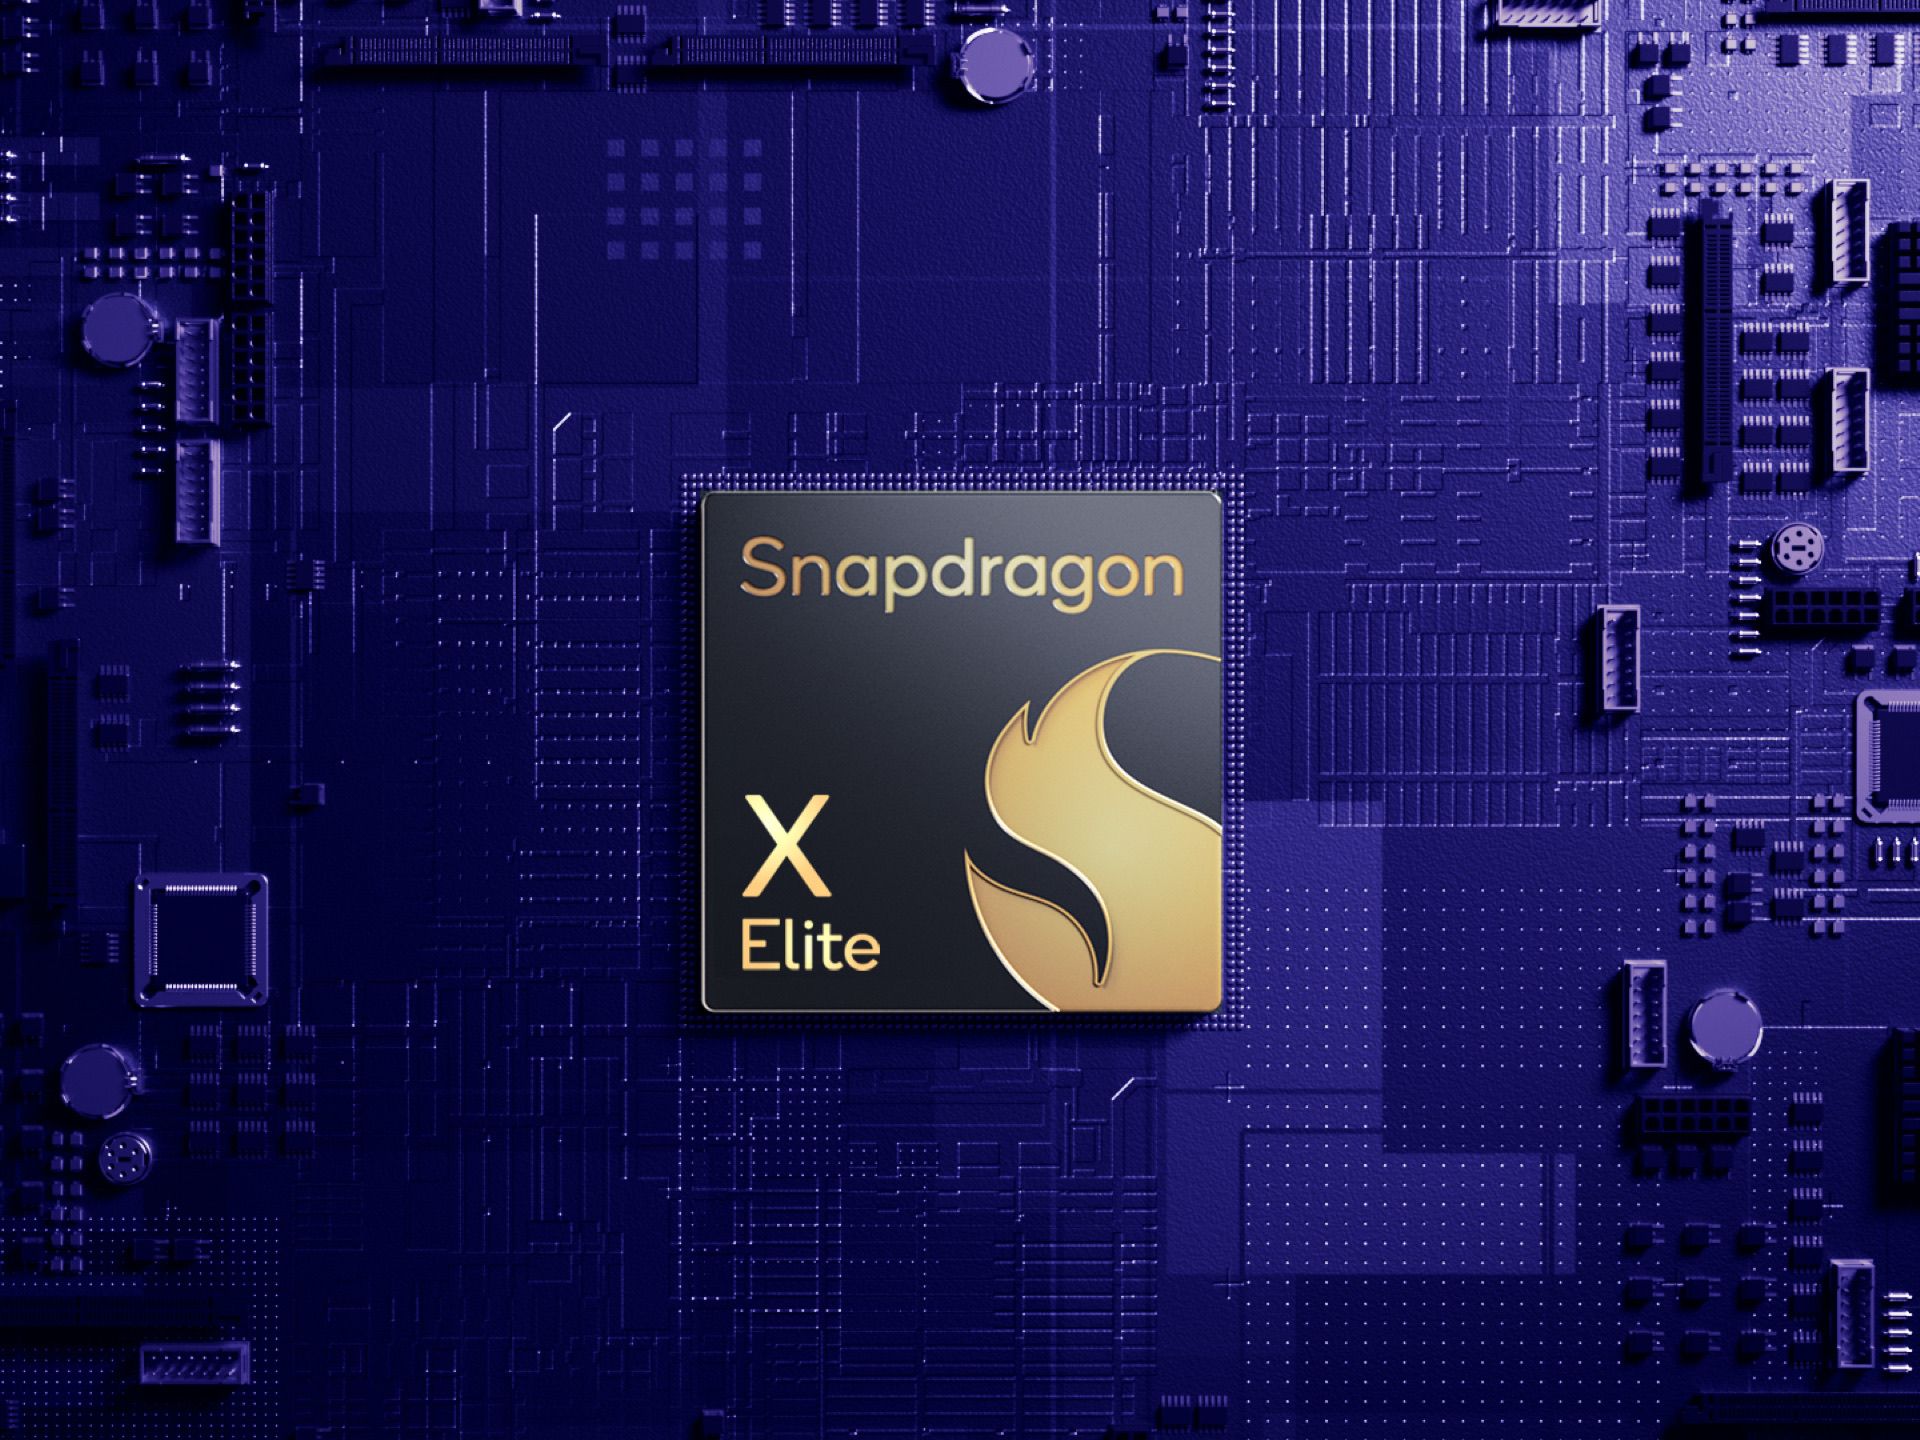 Snapdragon X Elite main image